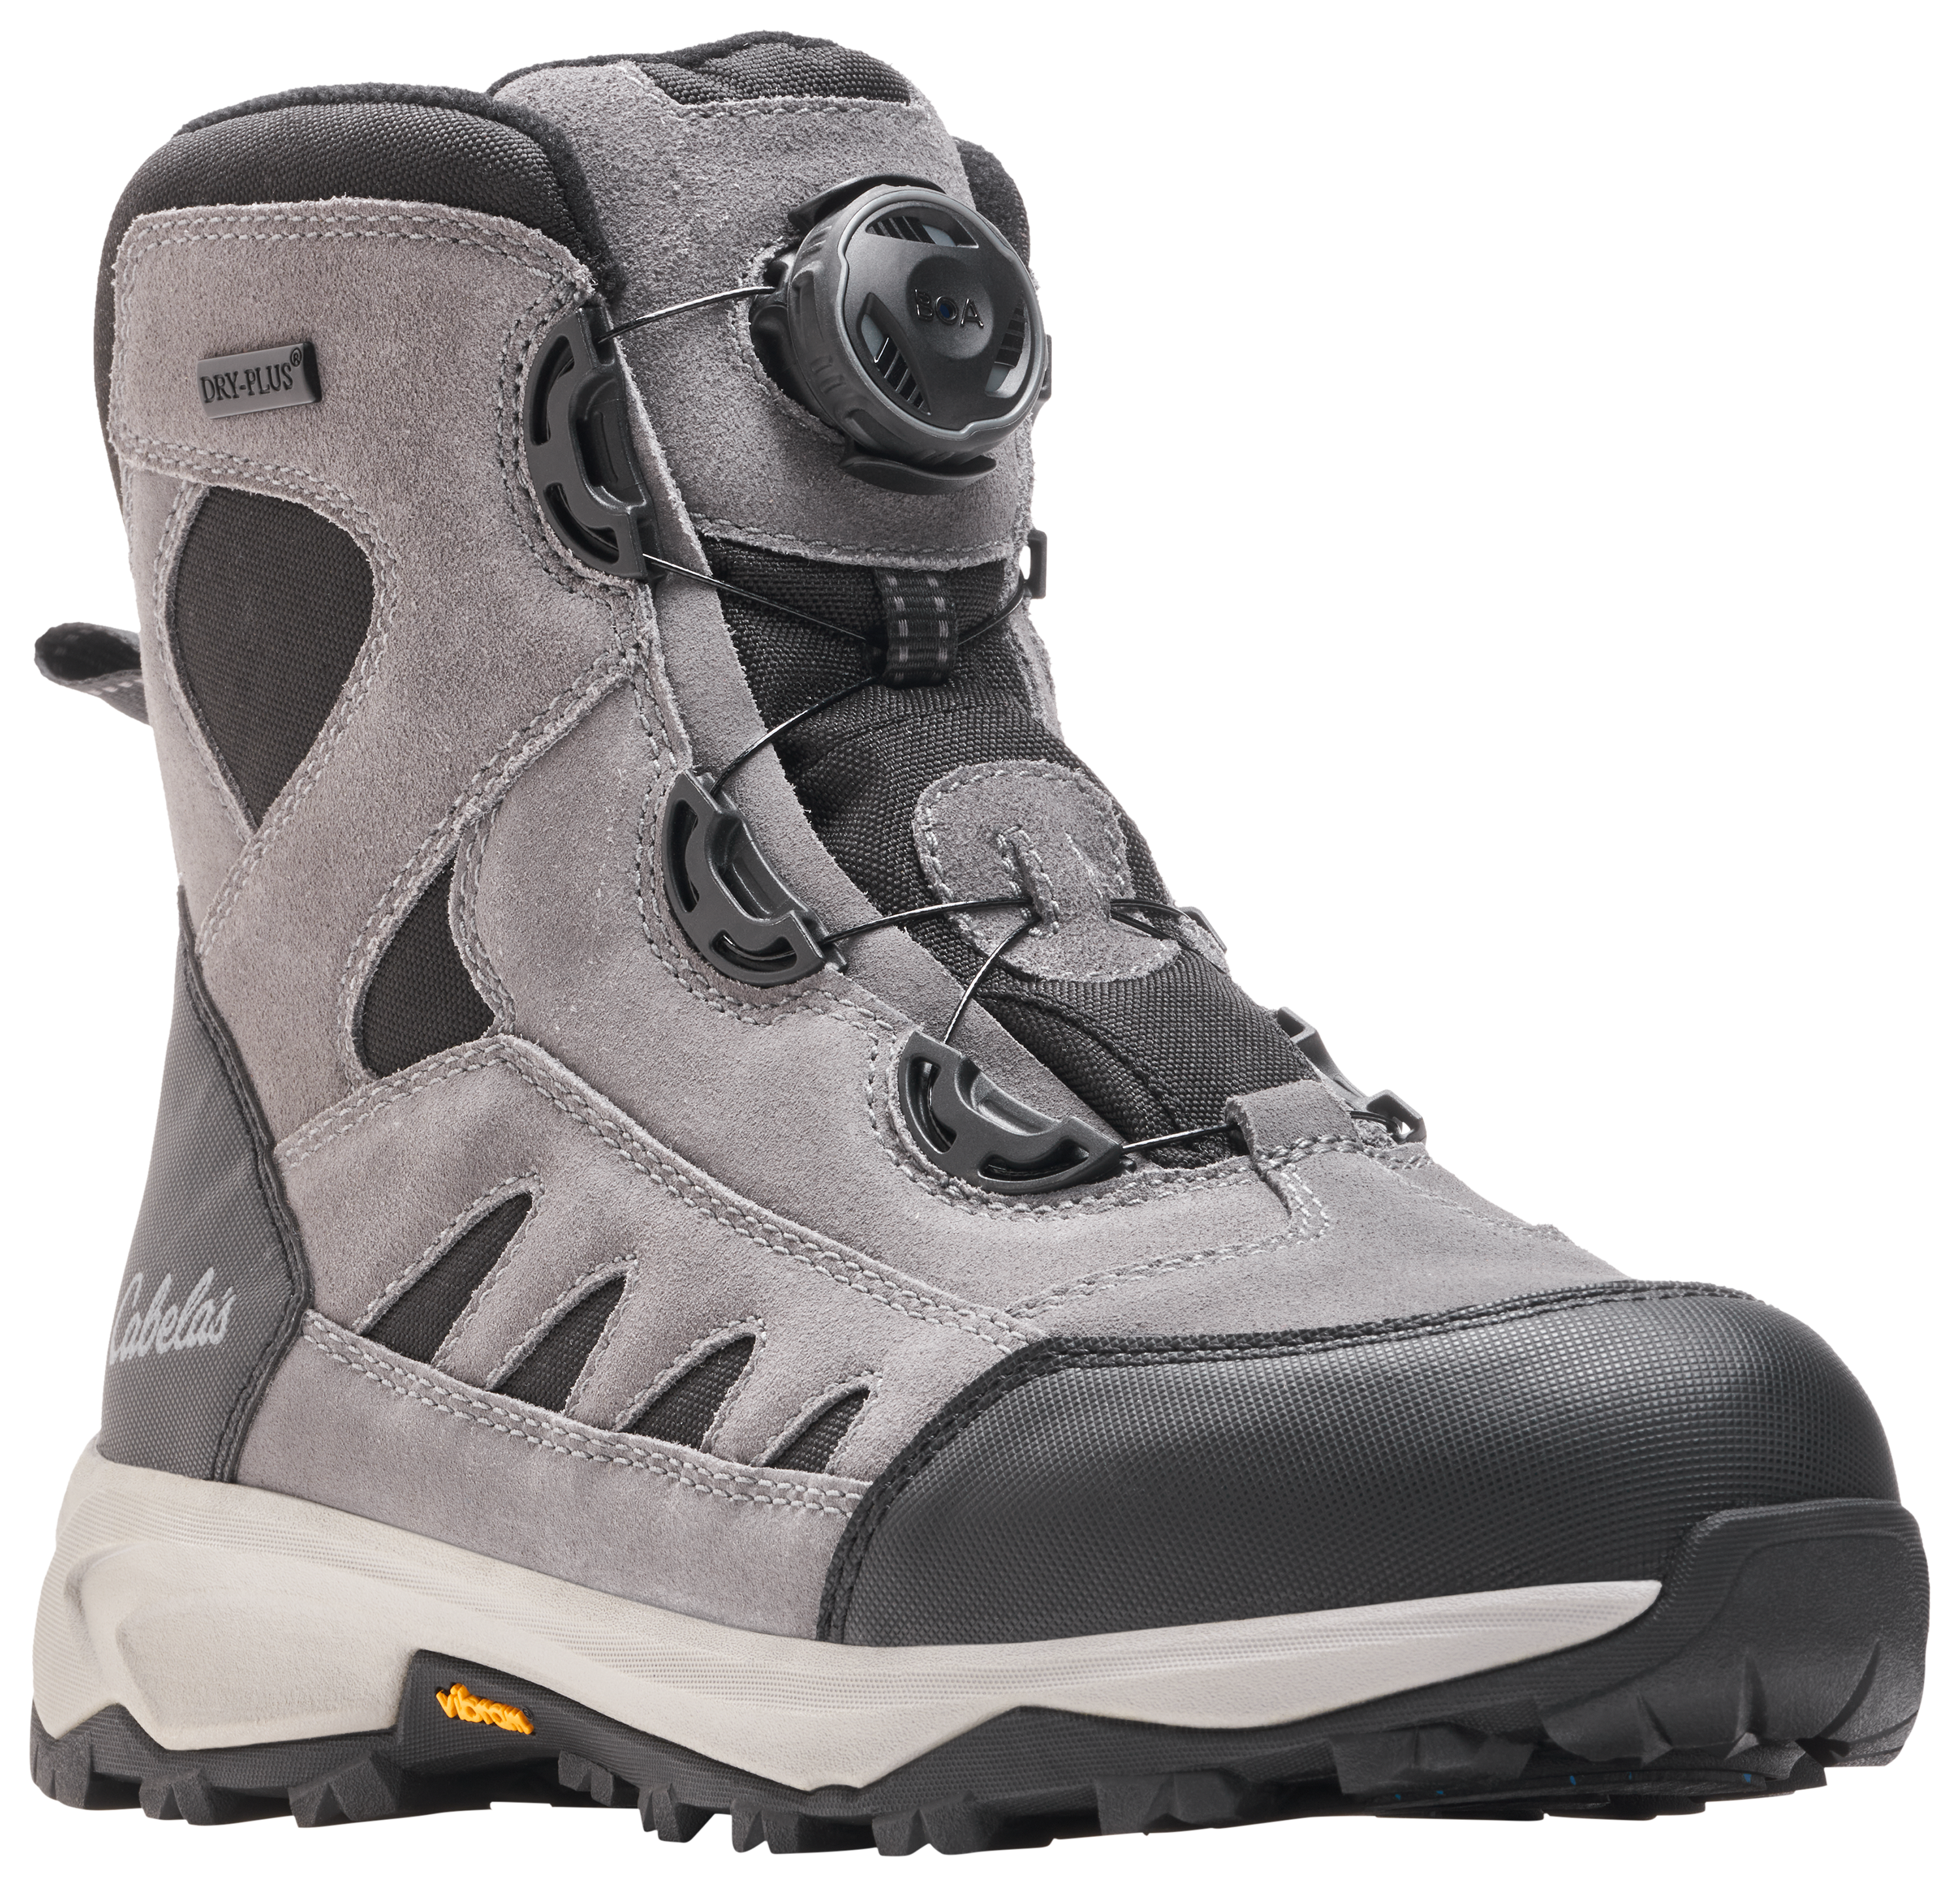 Cabela's Snow Runner Max 2.0 BOA Insulated Waterproof Winter Boots for Men - Granite Gray - 12M